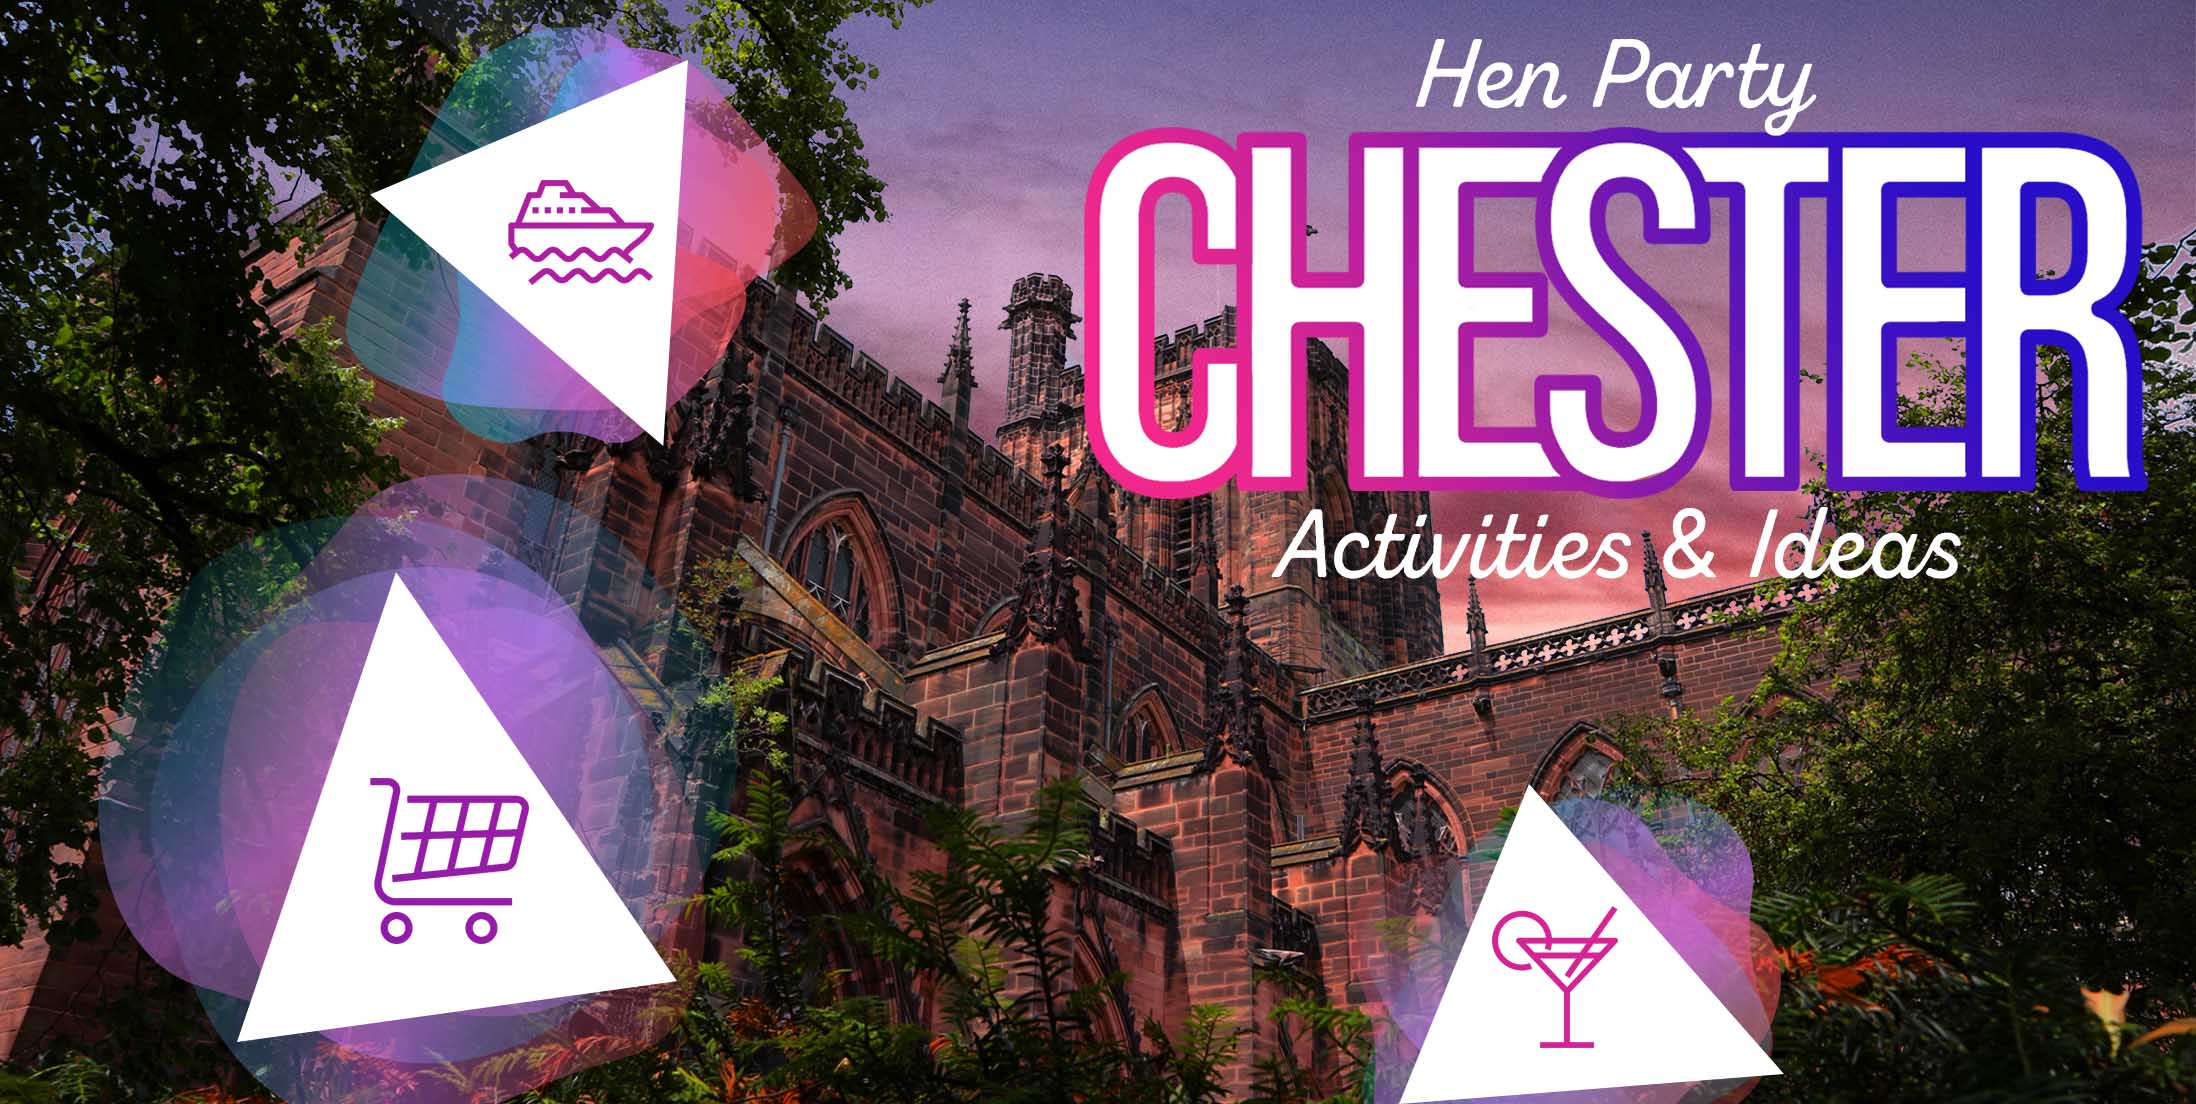 Hen Party Activities & Ideas in Chester